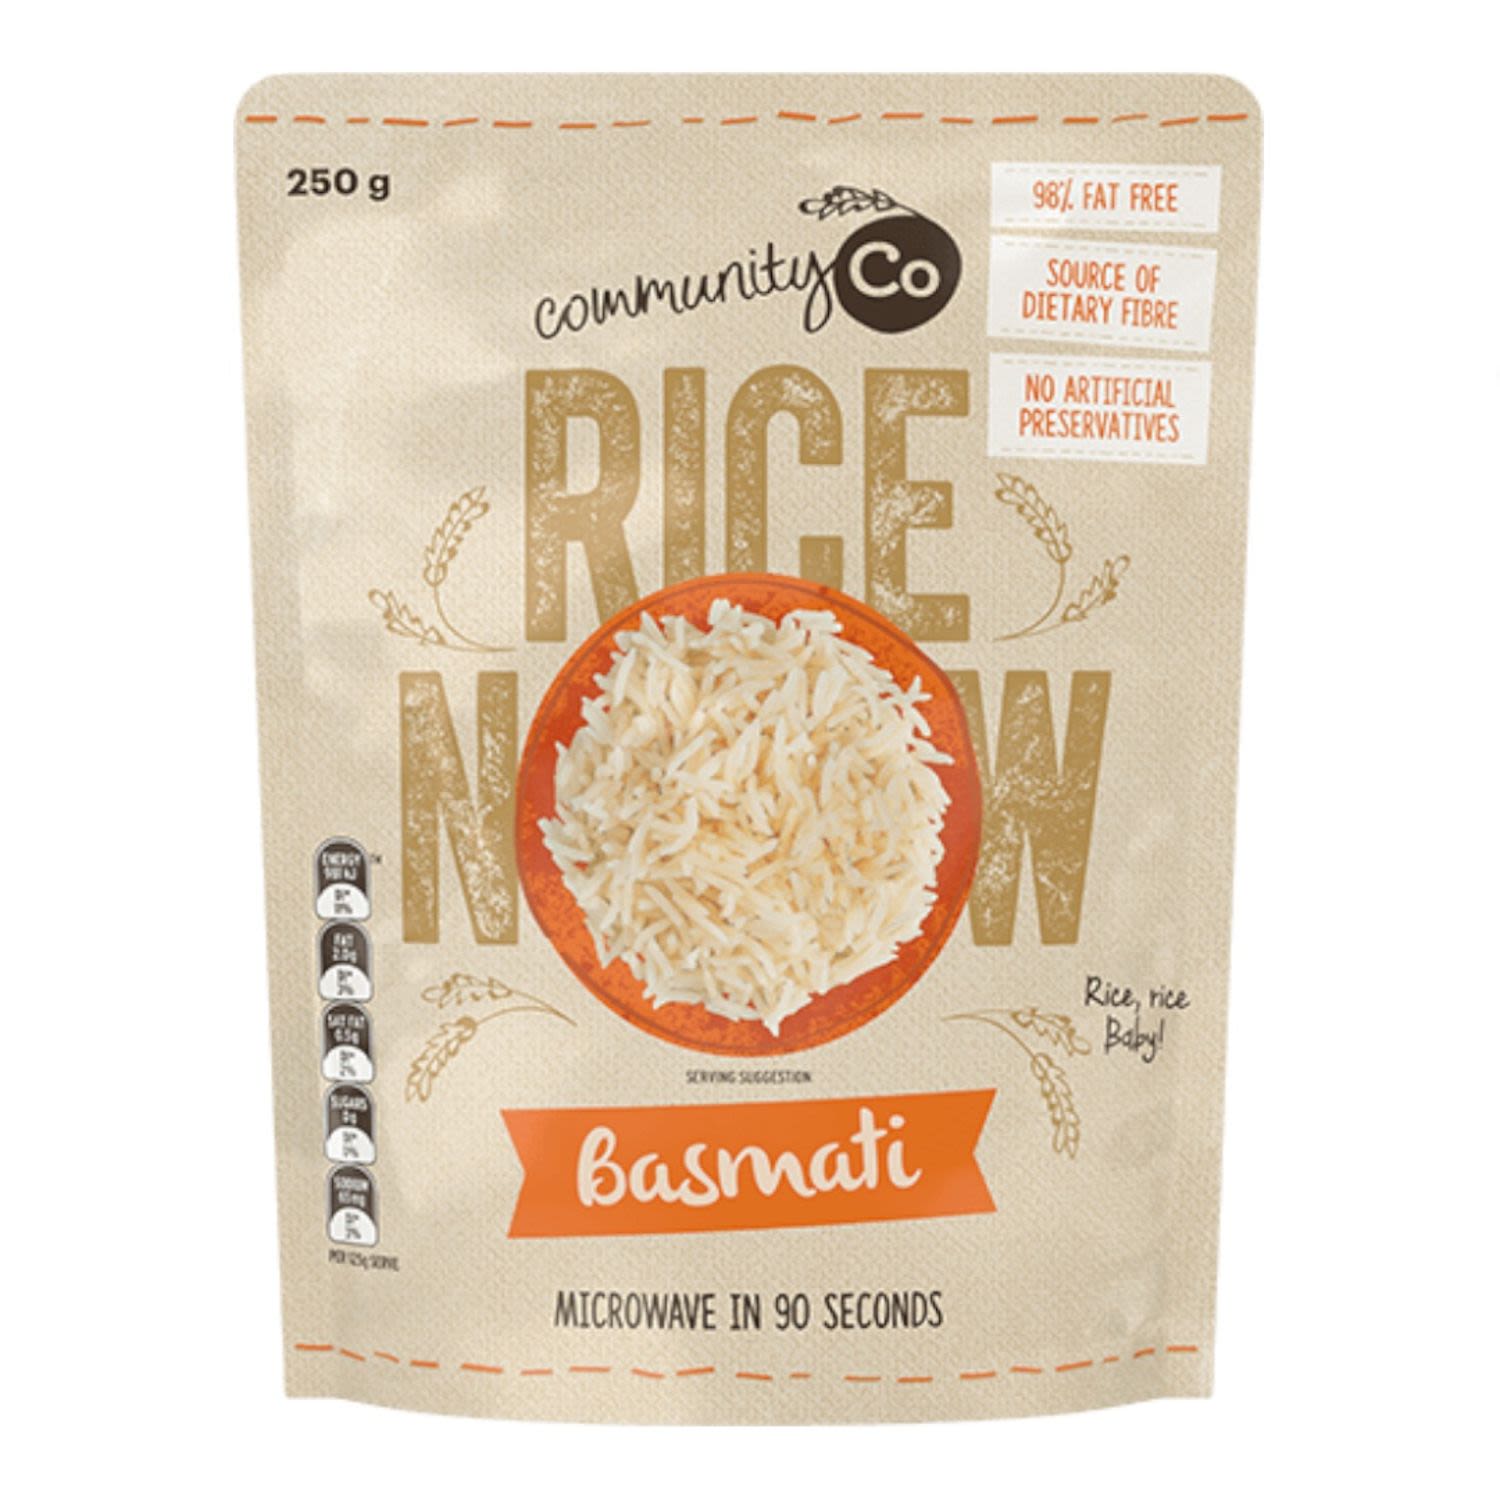 Community Co Microwave Basmati Rice, 250 Gram